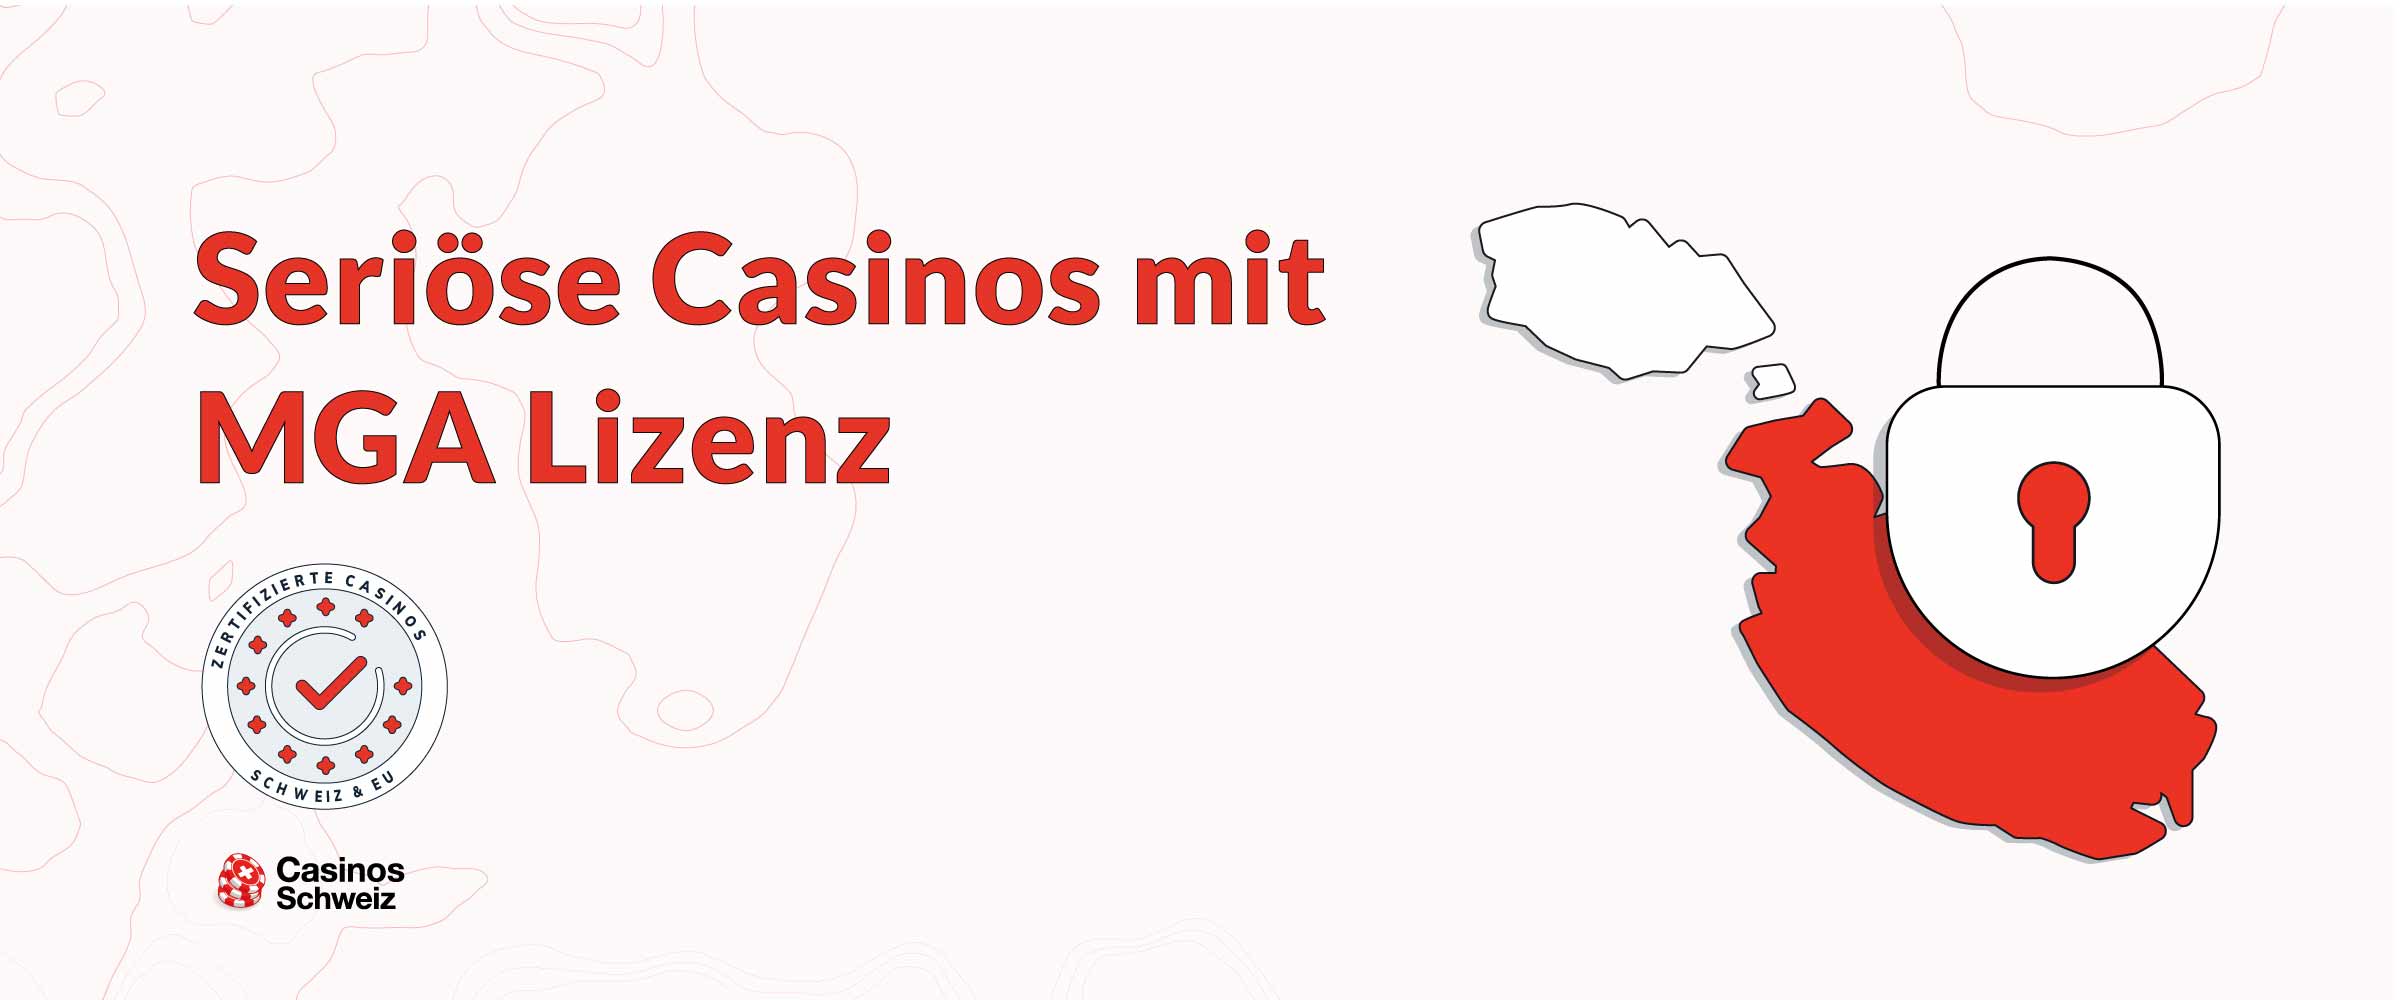 Seriöse Casino mit MGA Lizenz